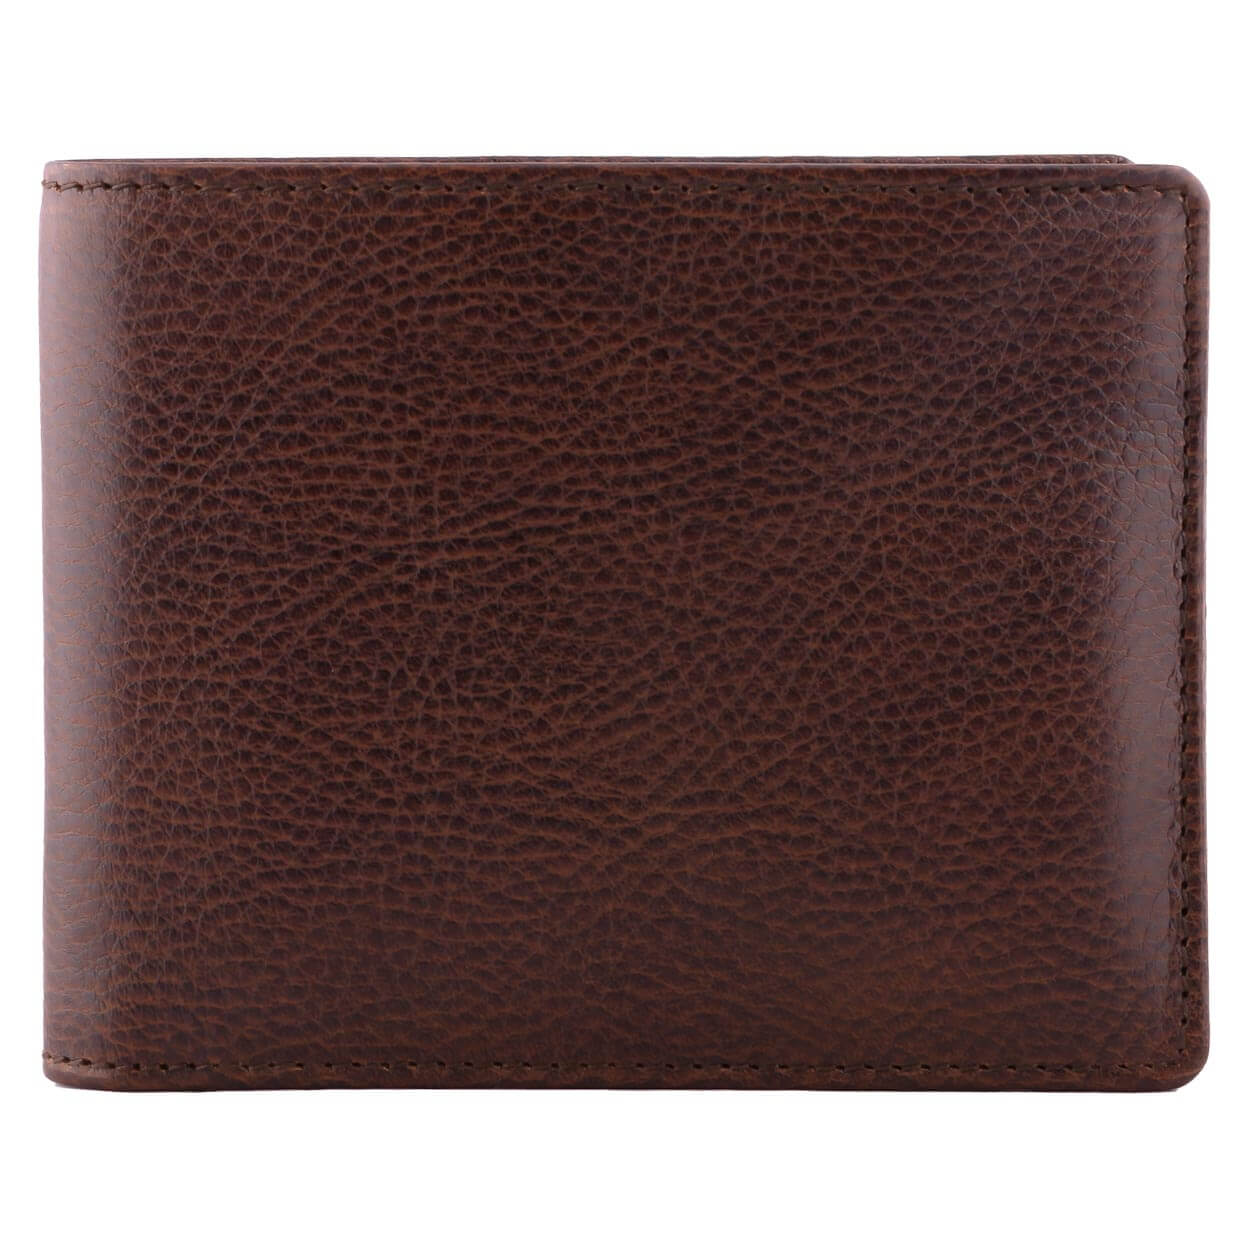 DiLoro Men's Bifold Leather Wallet Lugano Gemini Brown - Front View